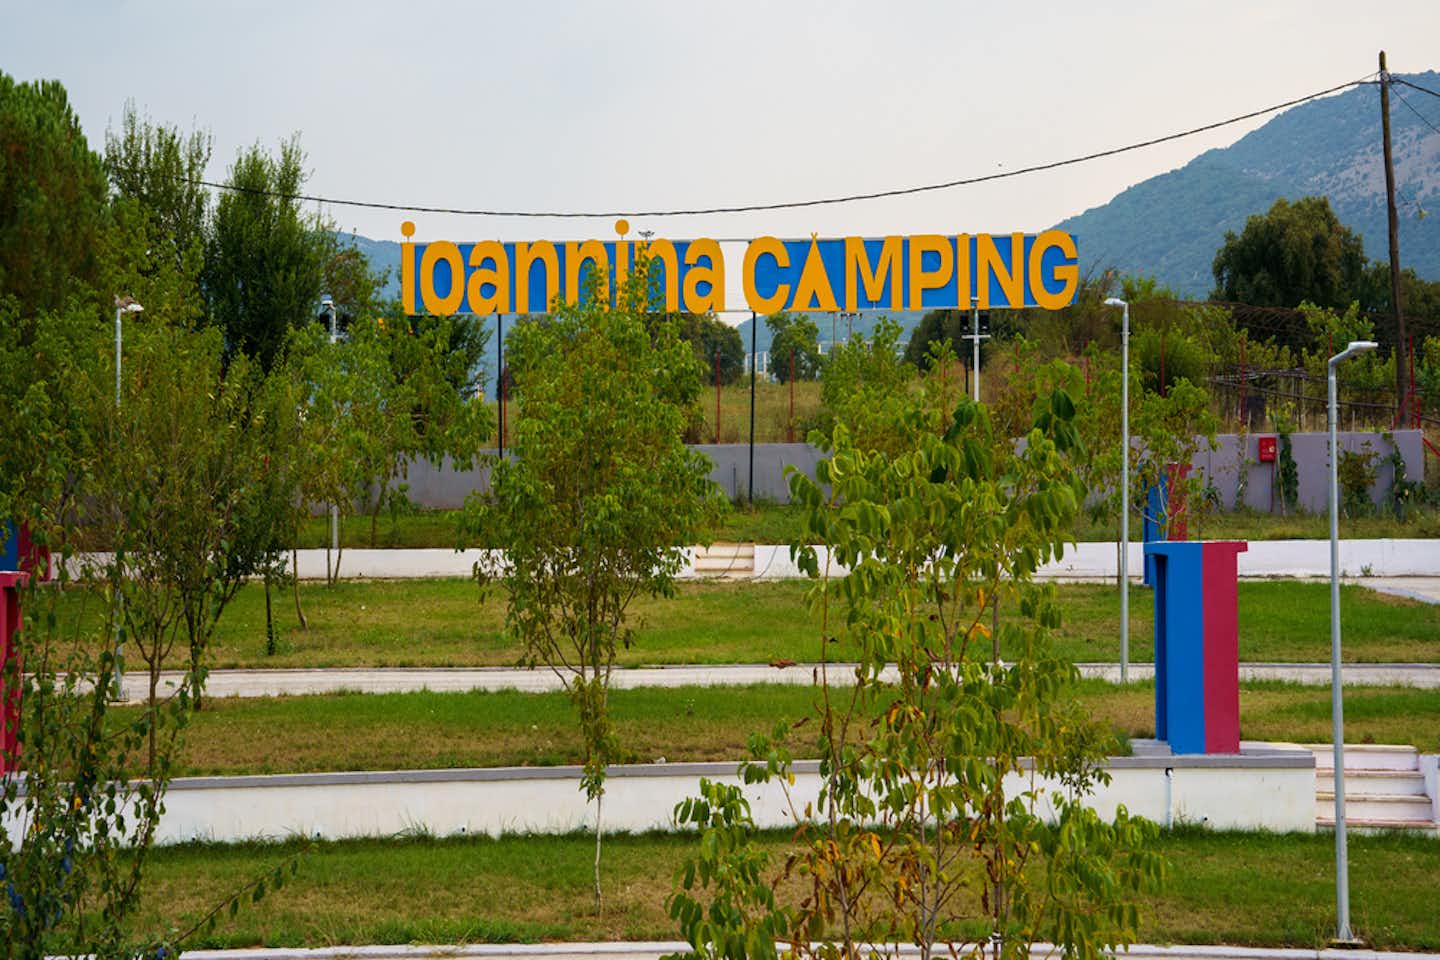 Ioannina Camping - Glamping - Überblick auf den Campingplatz